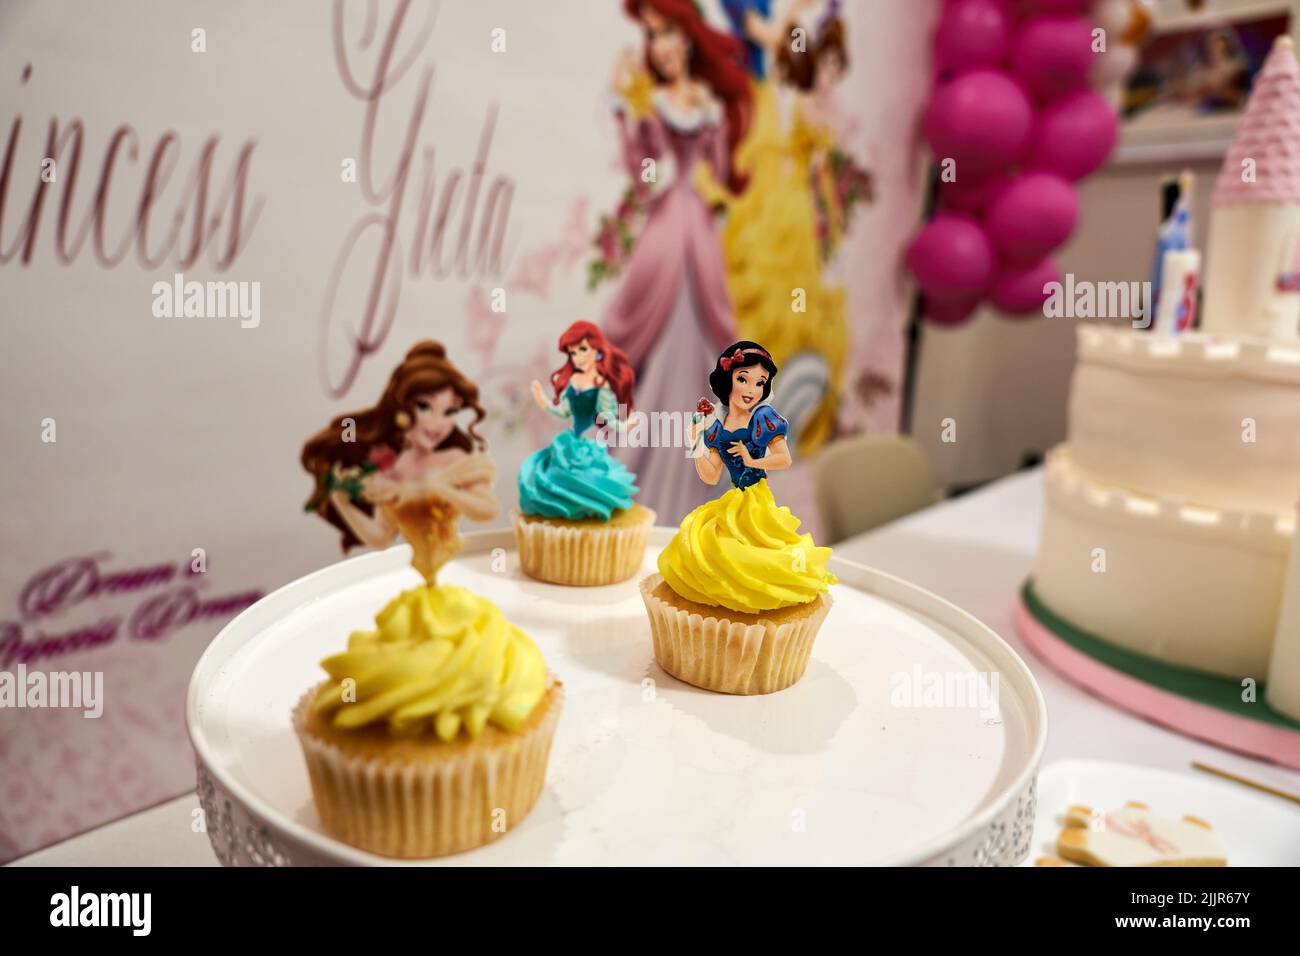 Vibrant cupcakes with disney princesses design Stock Photo